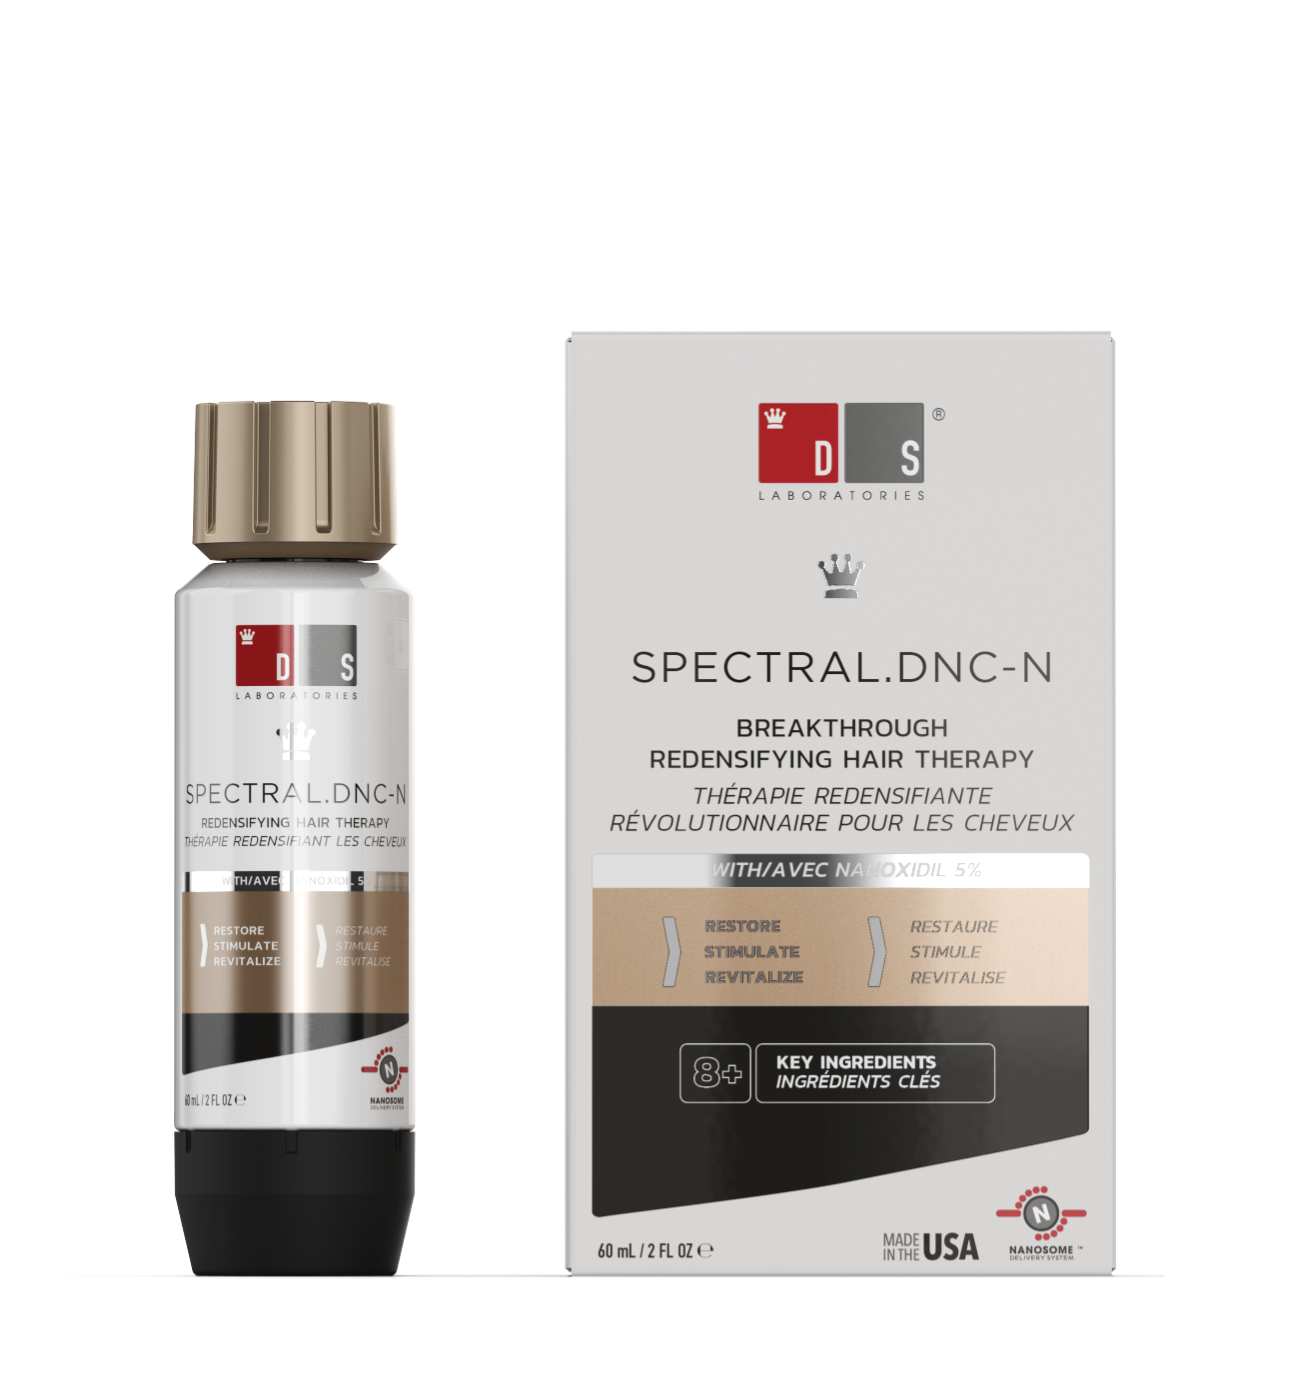 SPECTRAL.DNC-N HAIR DENSITY SERUM WITH NANOXIDIL® 5%